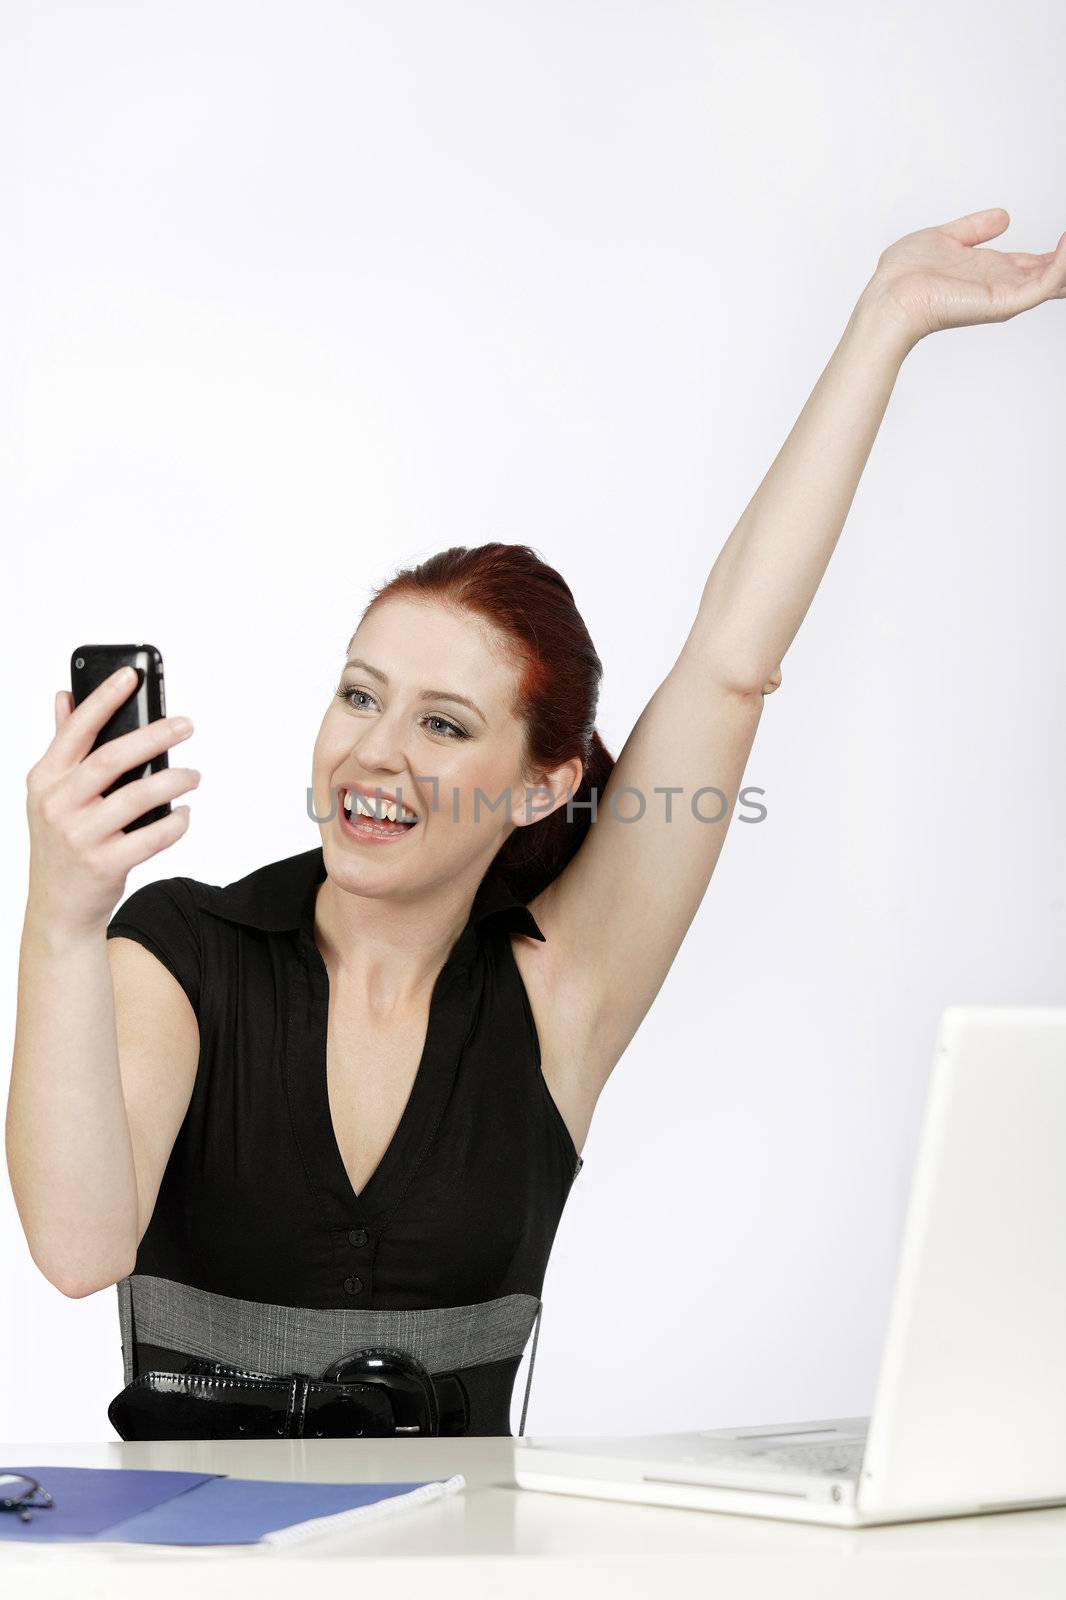 Woman receiving good news at work by studiofi